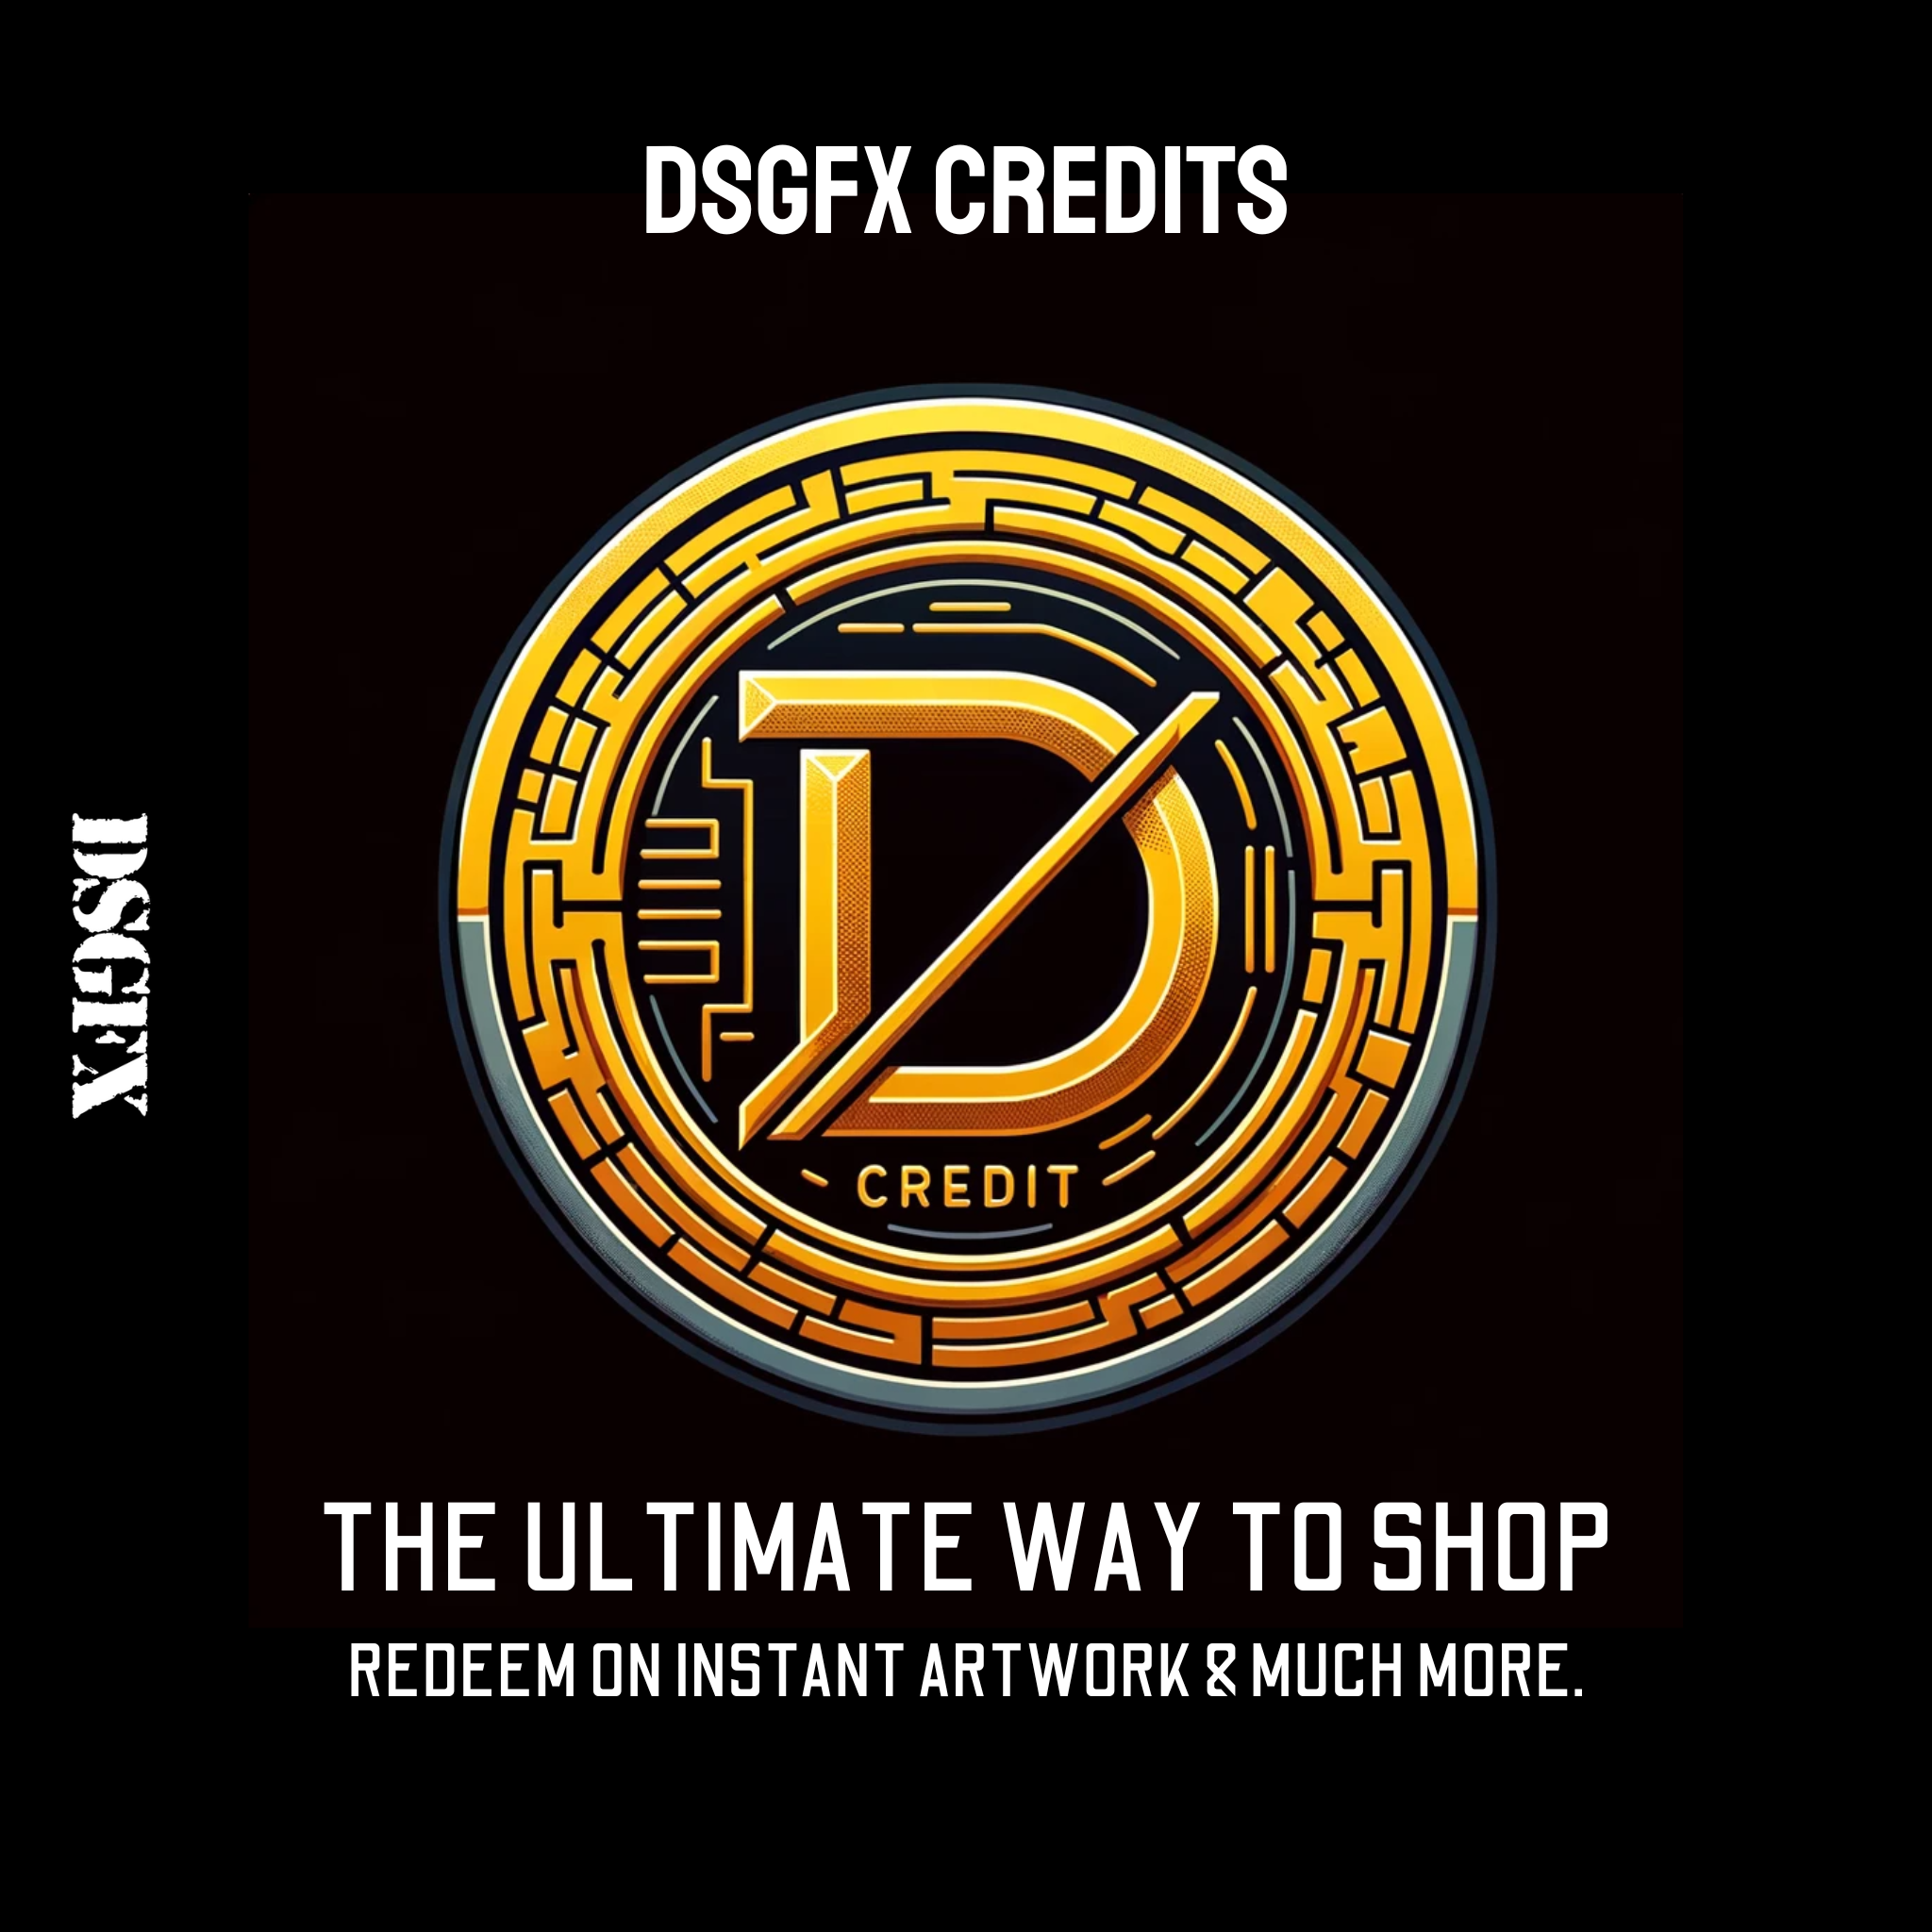 DSGFX Credit Packs